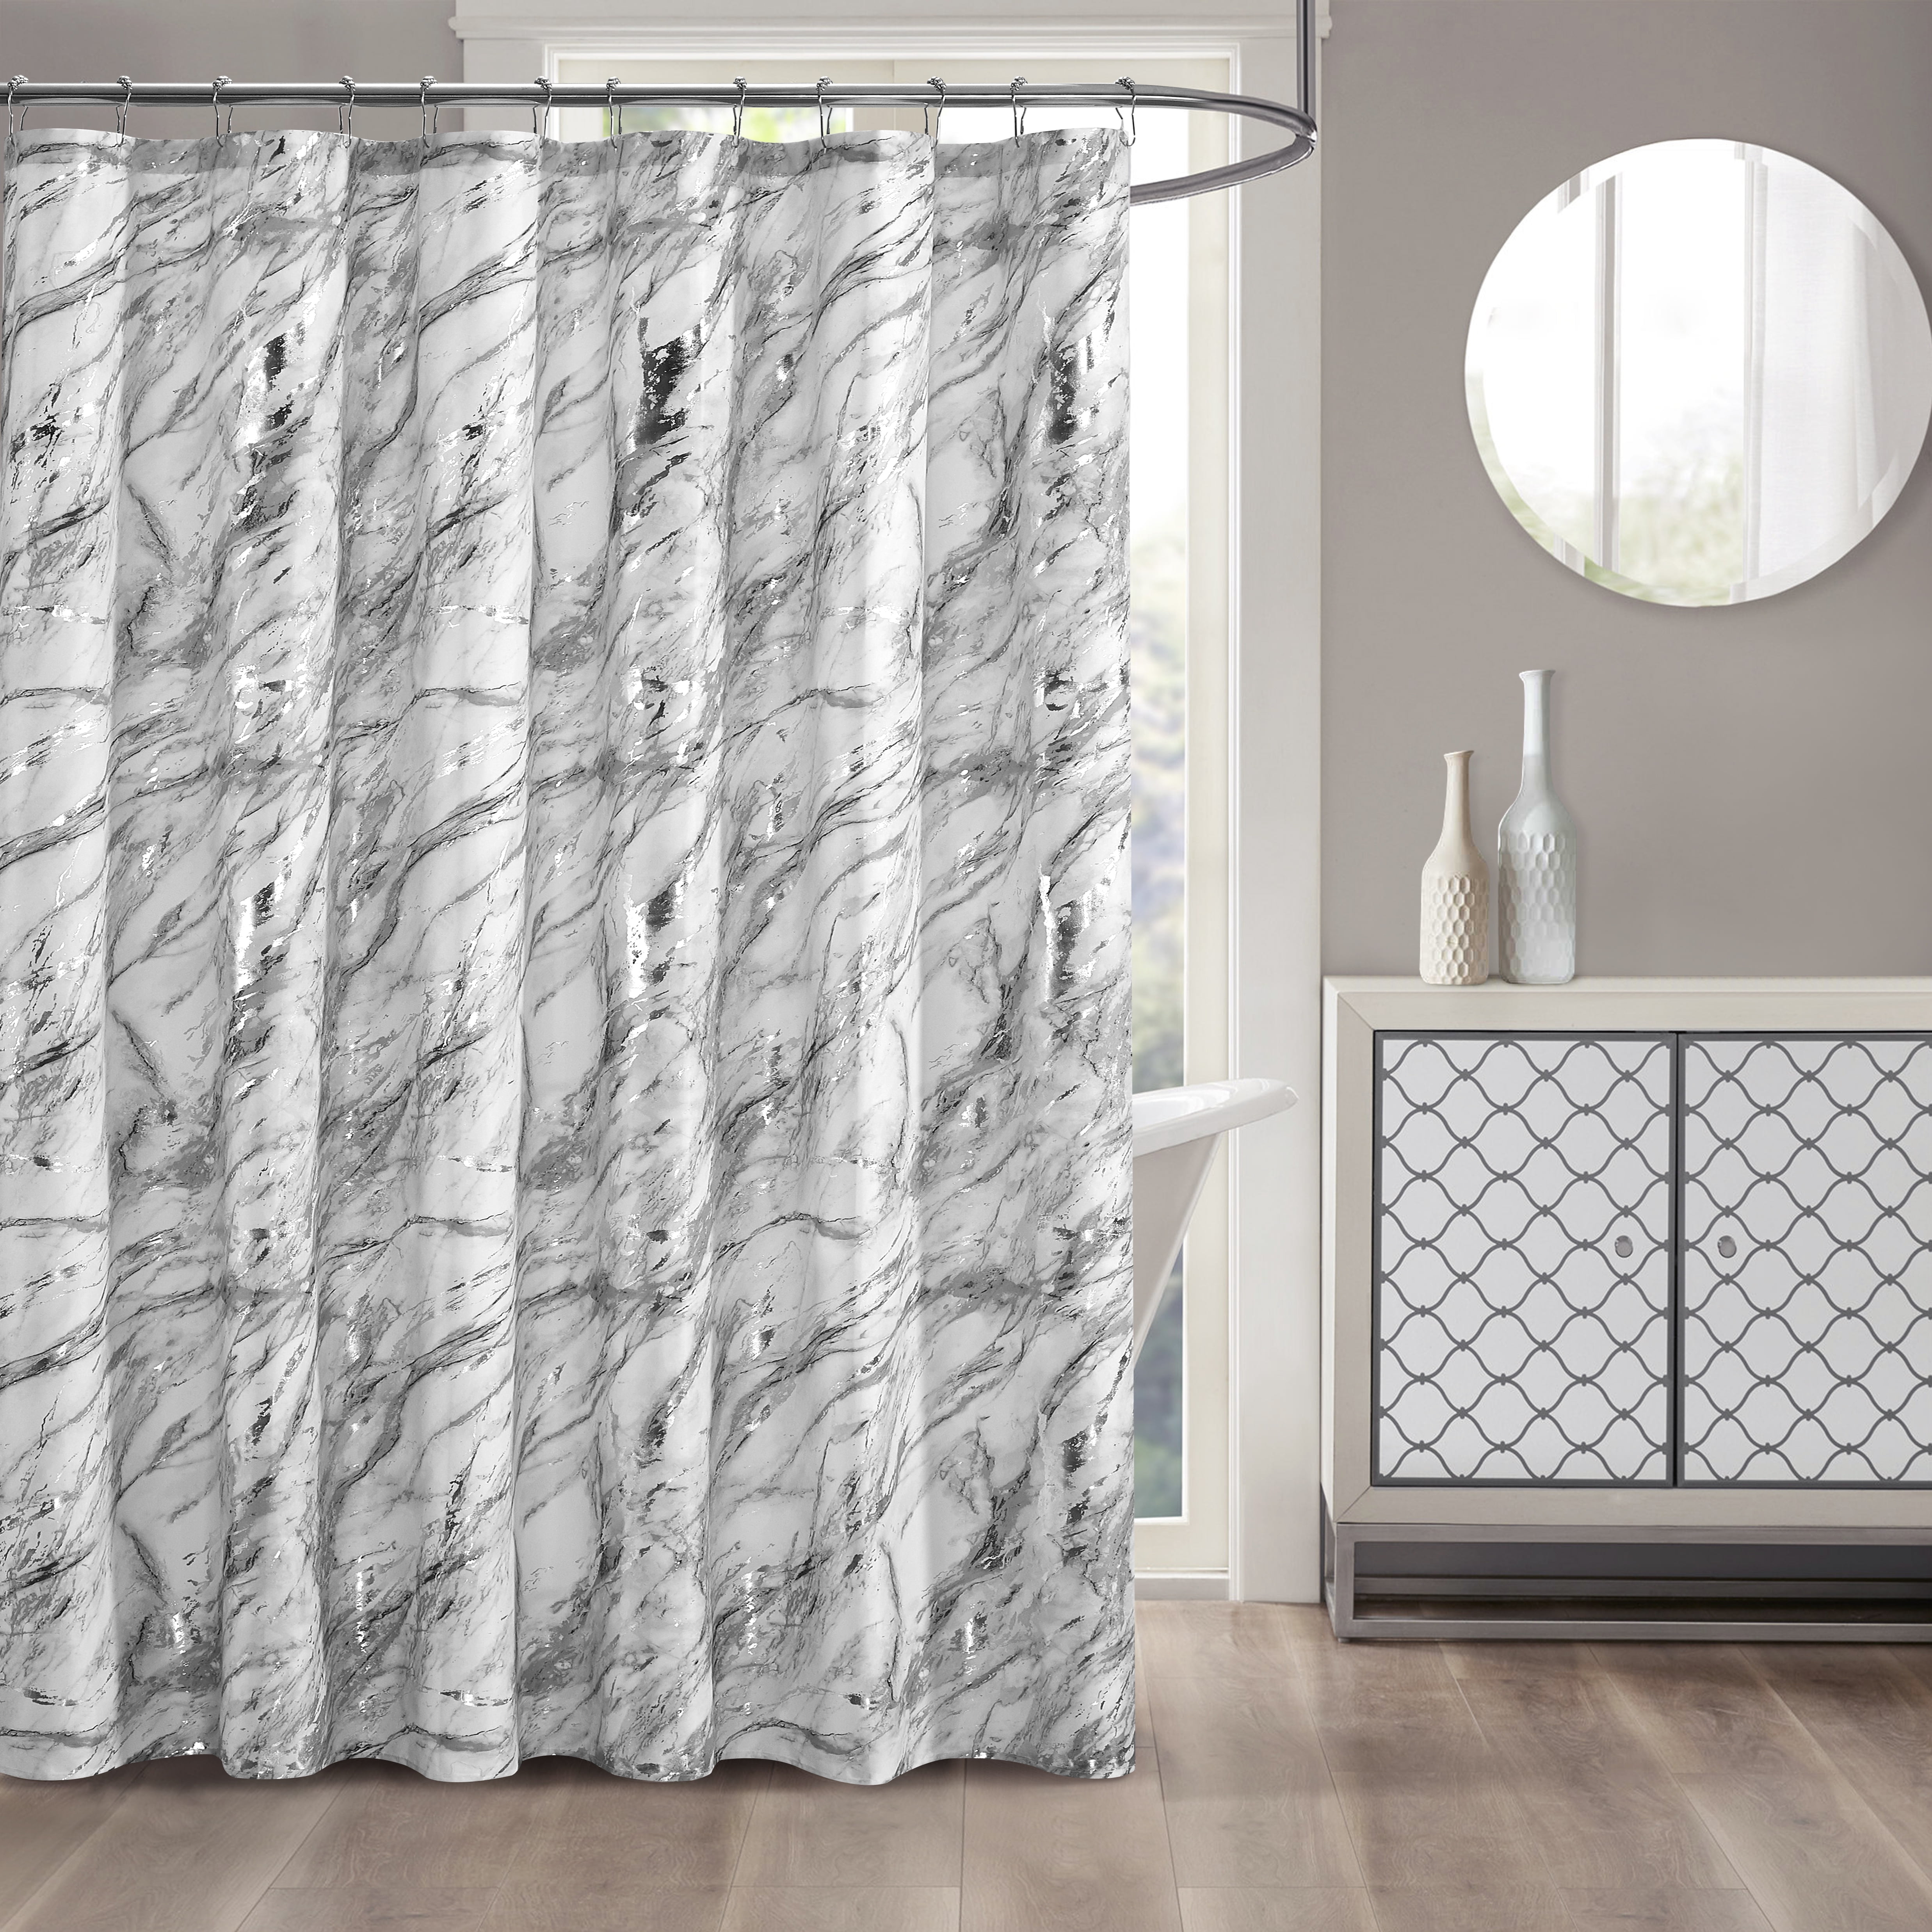 Libaoge Fresh Design Cute Bubble Green Sea Turtle Waterproof Fabric Polyester Shower Curtain Bathroom Decor 72x72 Inch Your Home Choice